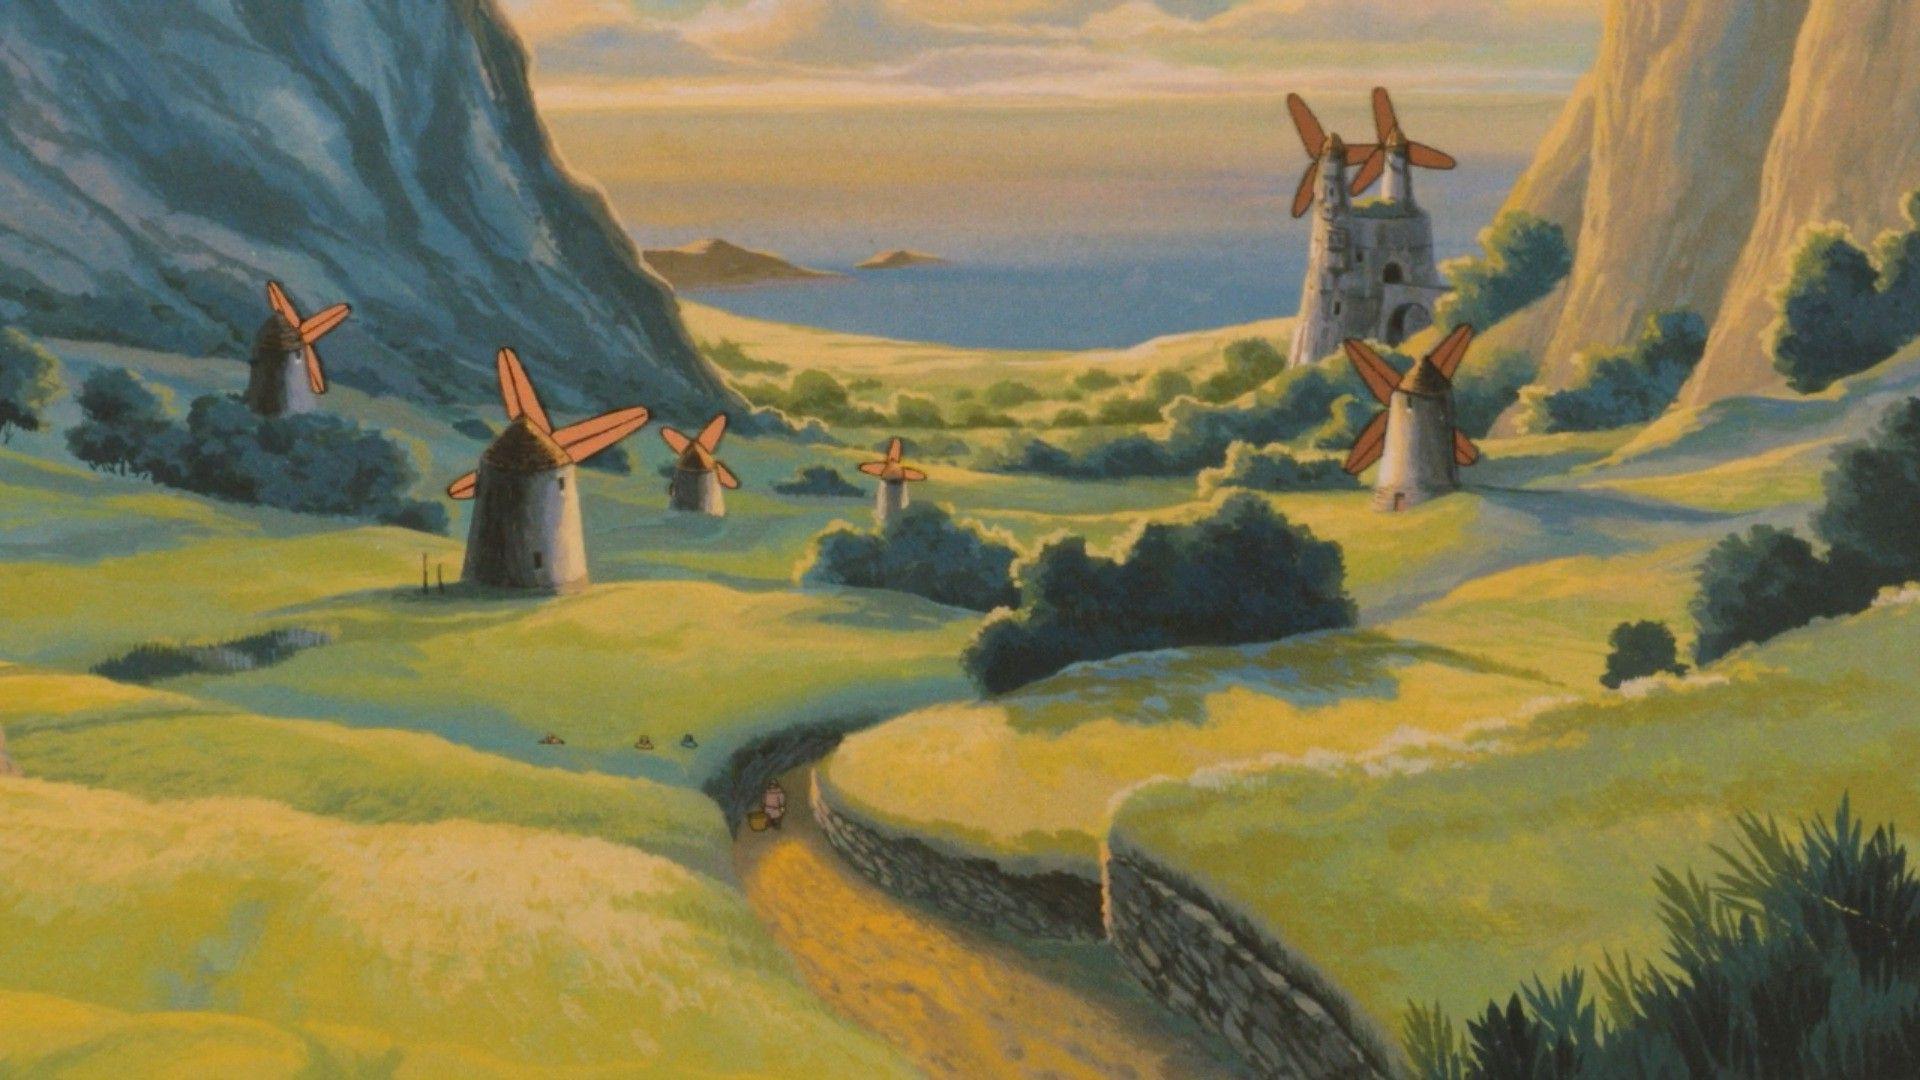 Studio Ghibli Landscape Wallpapers - Top Free Studio Ghibli Landscape